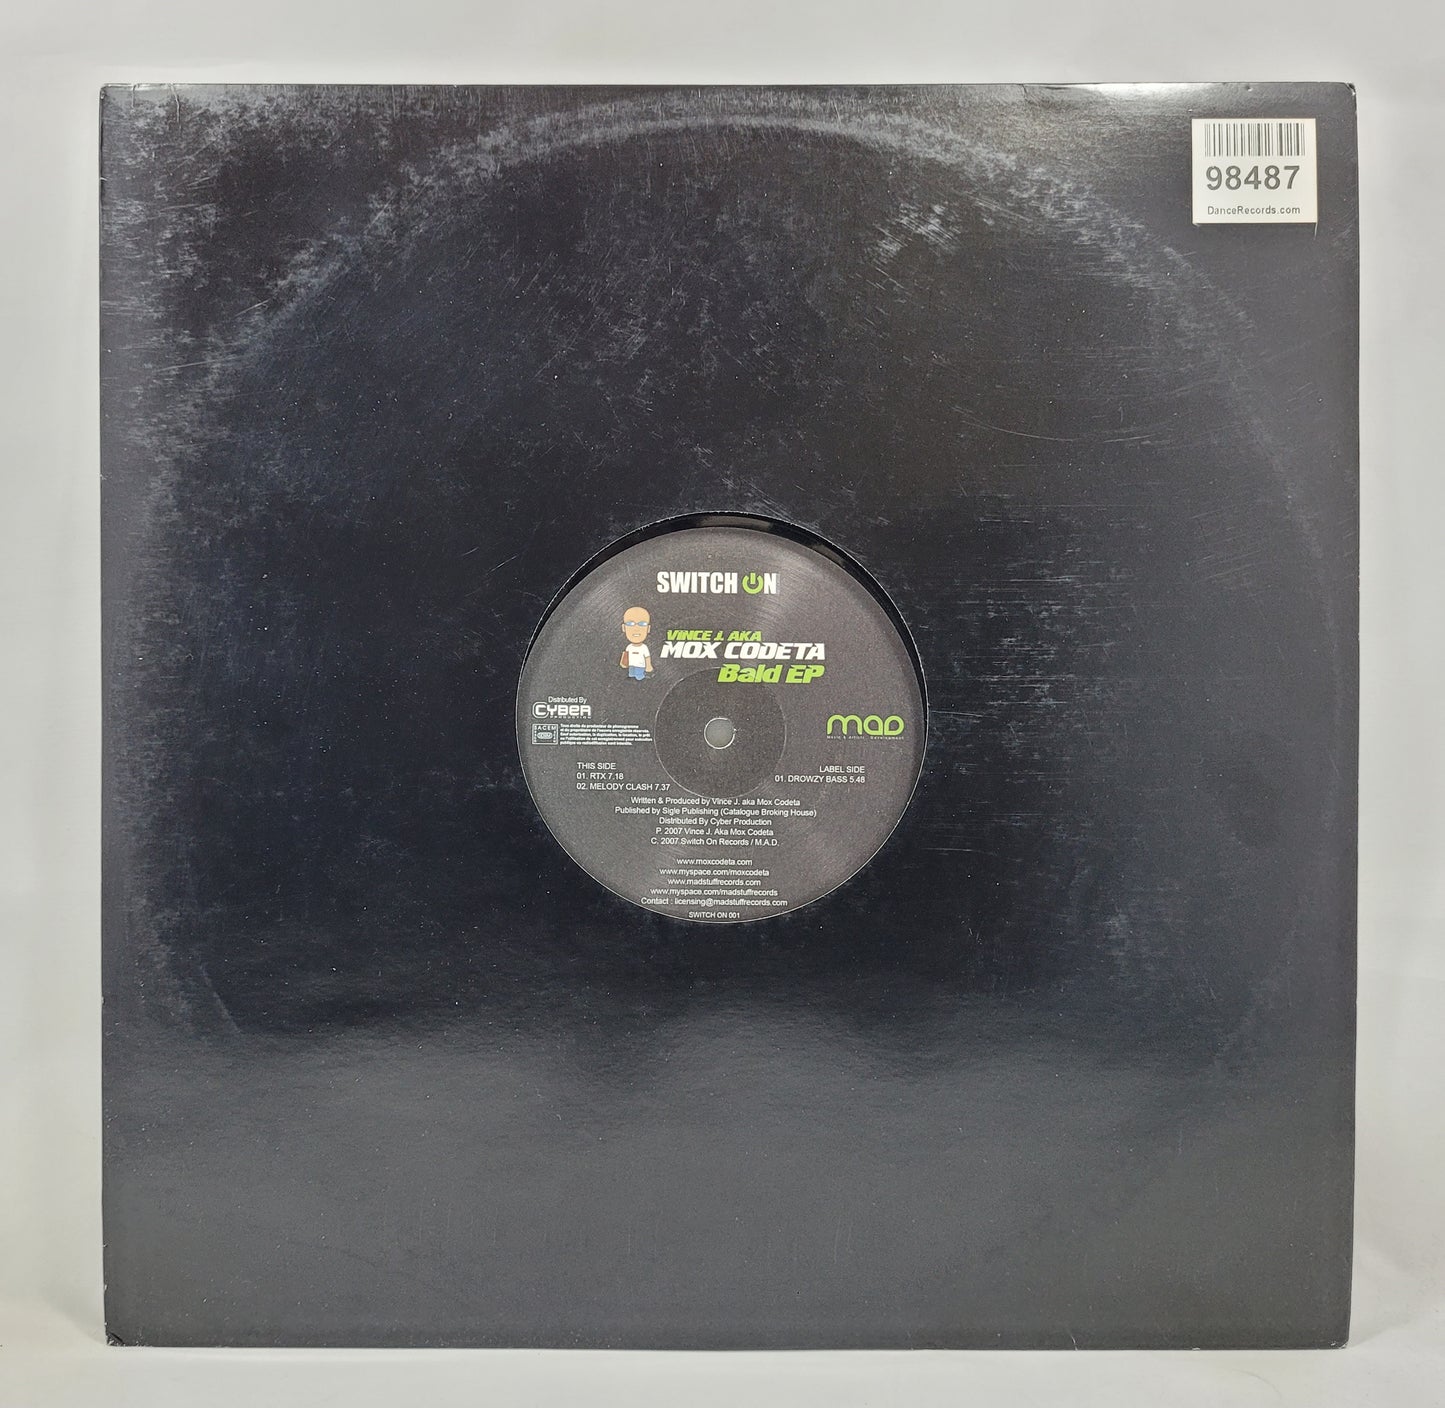 Vince J. aka Mox Codeta - Bald EP [2007 Used Vinyl Record 12" Single]